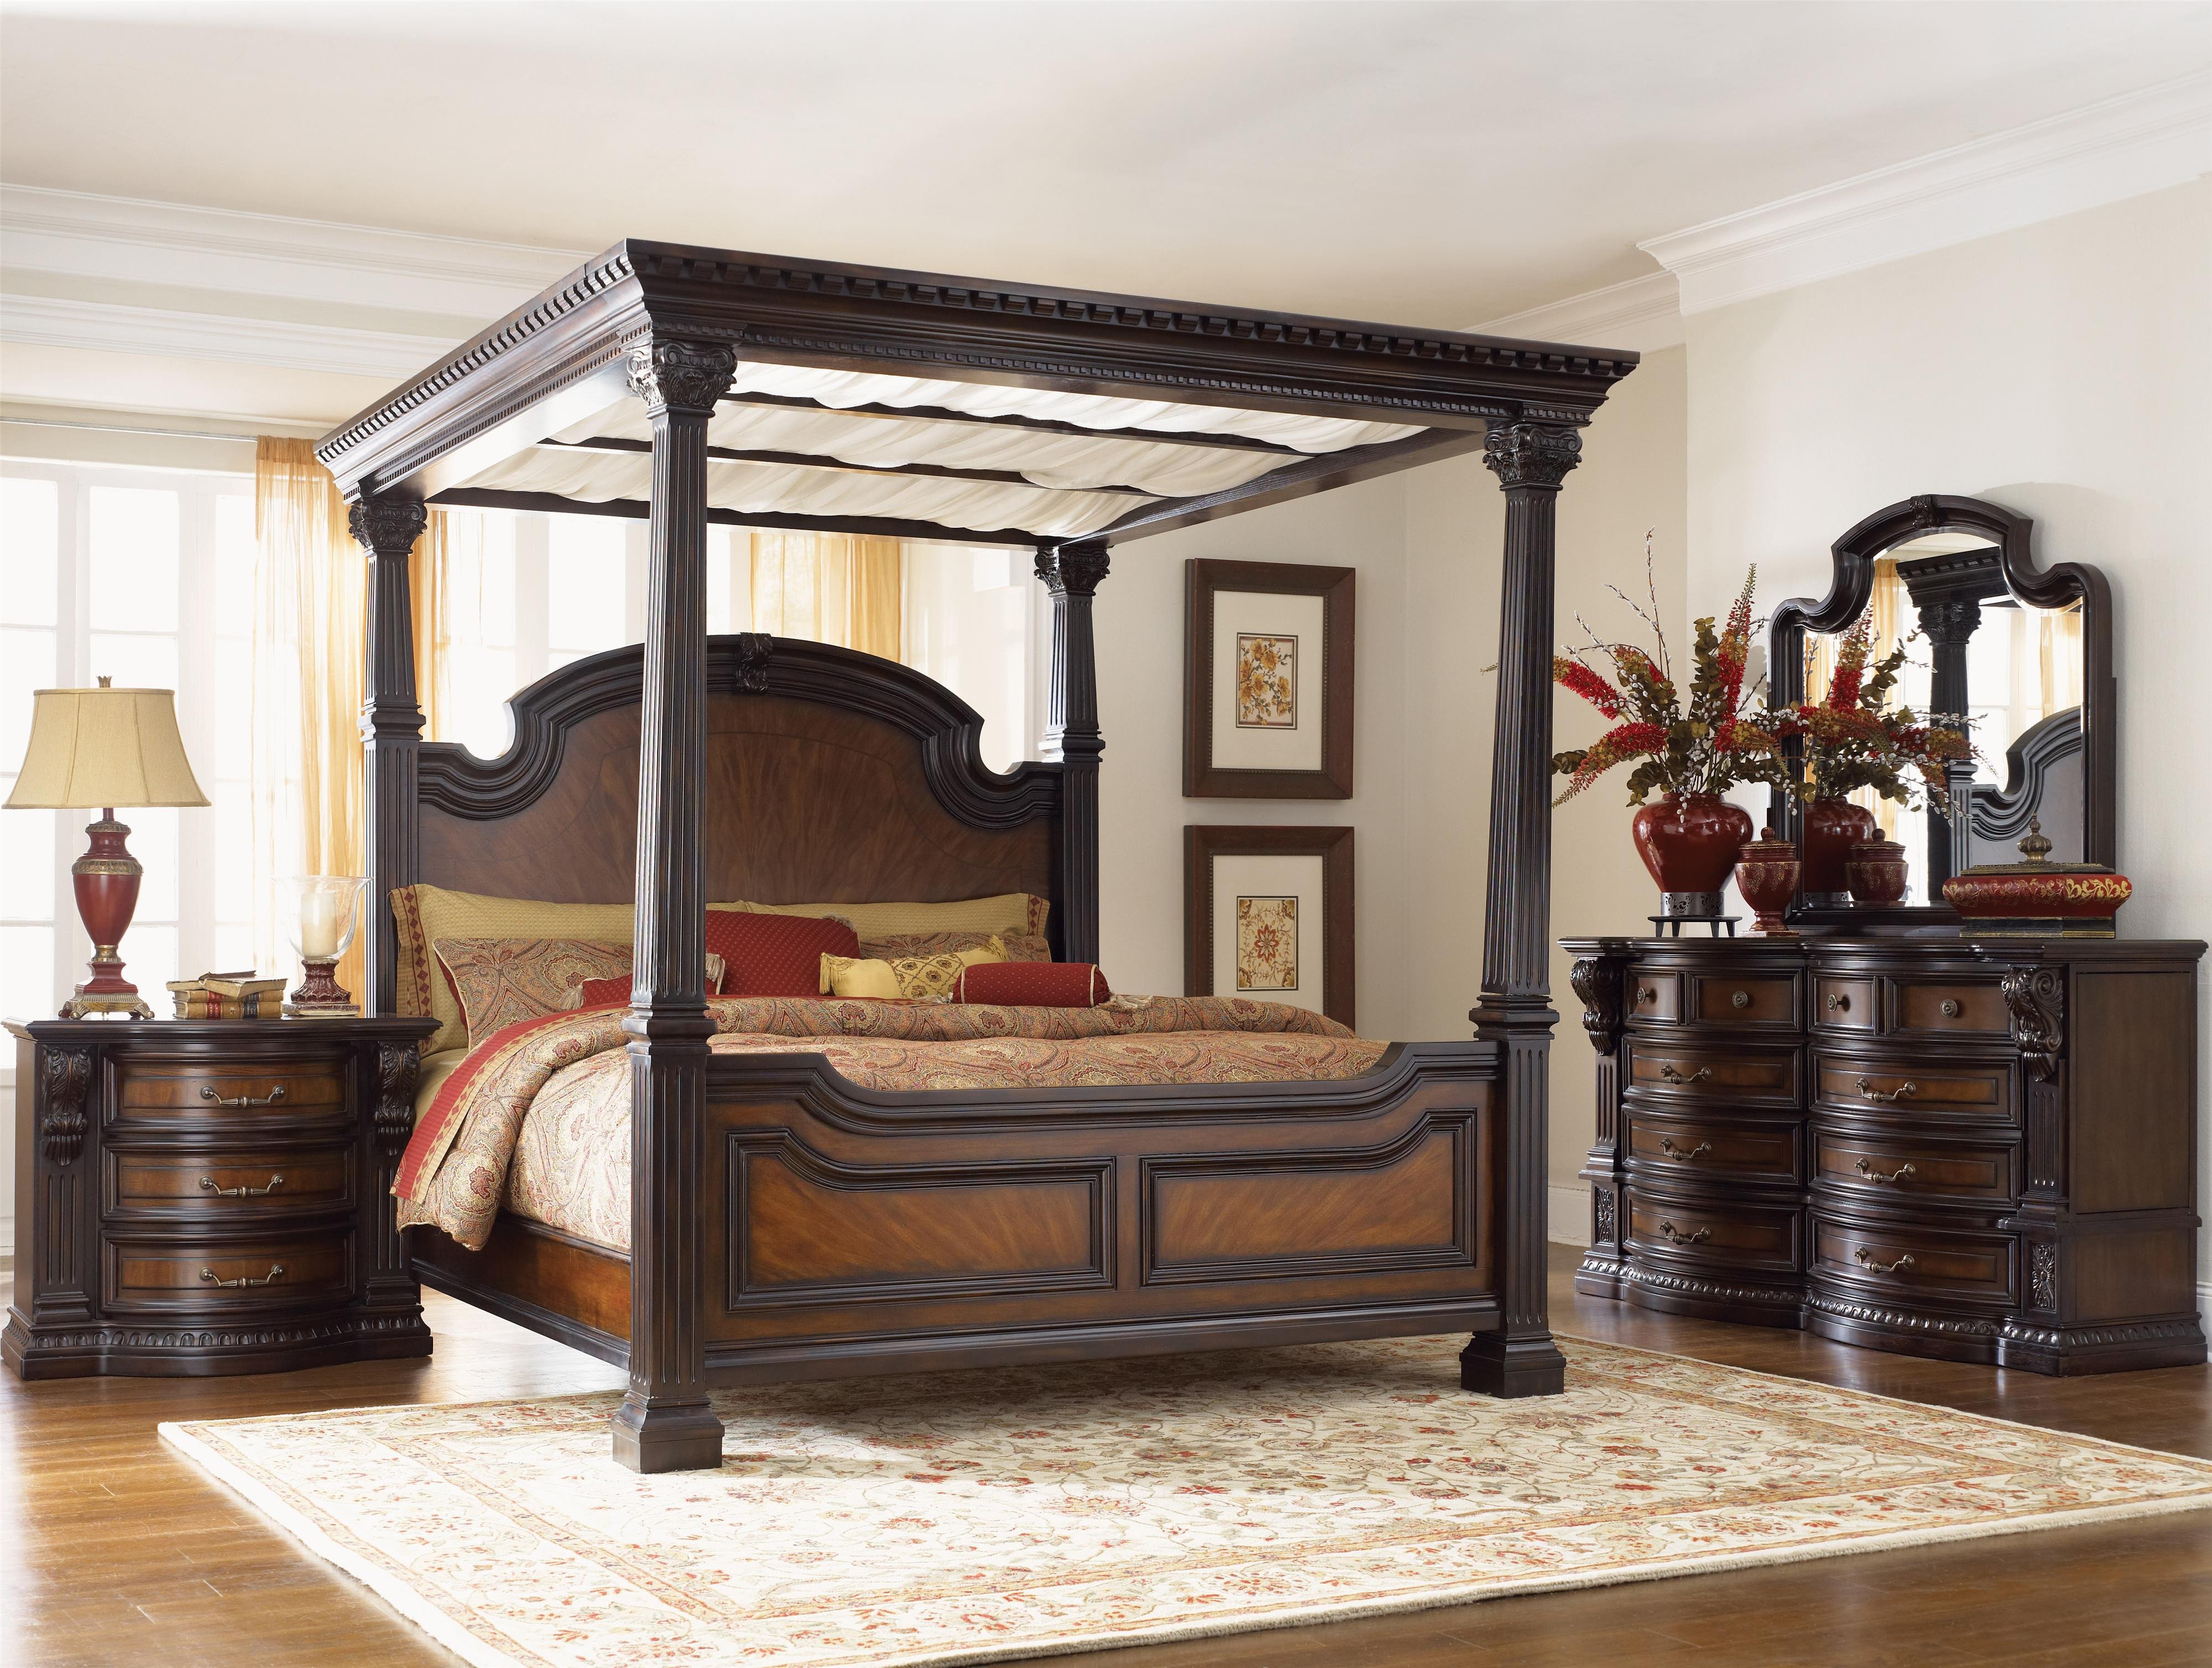 California King Bedroom Set Clearance Unique Grand Estates 02 by Fairmont Designs Royal Furniture